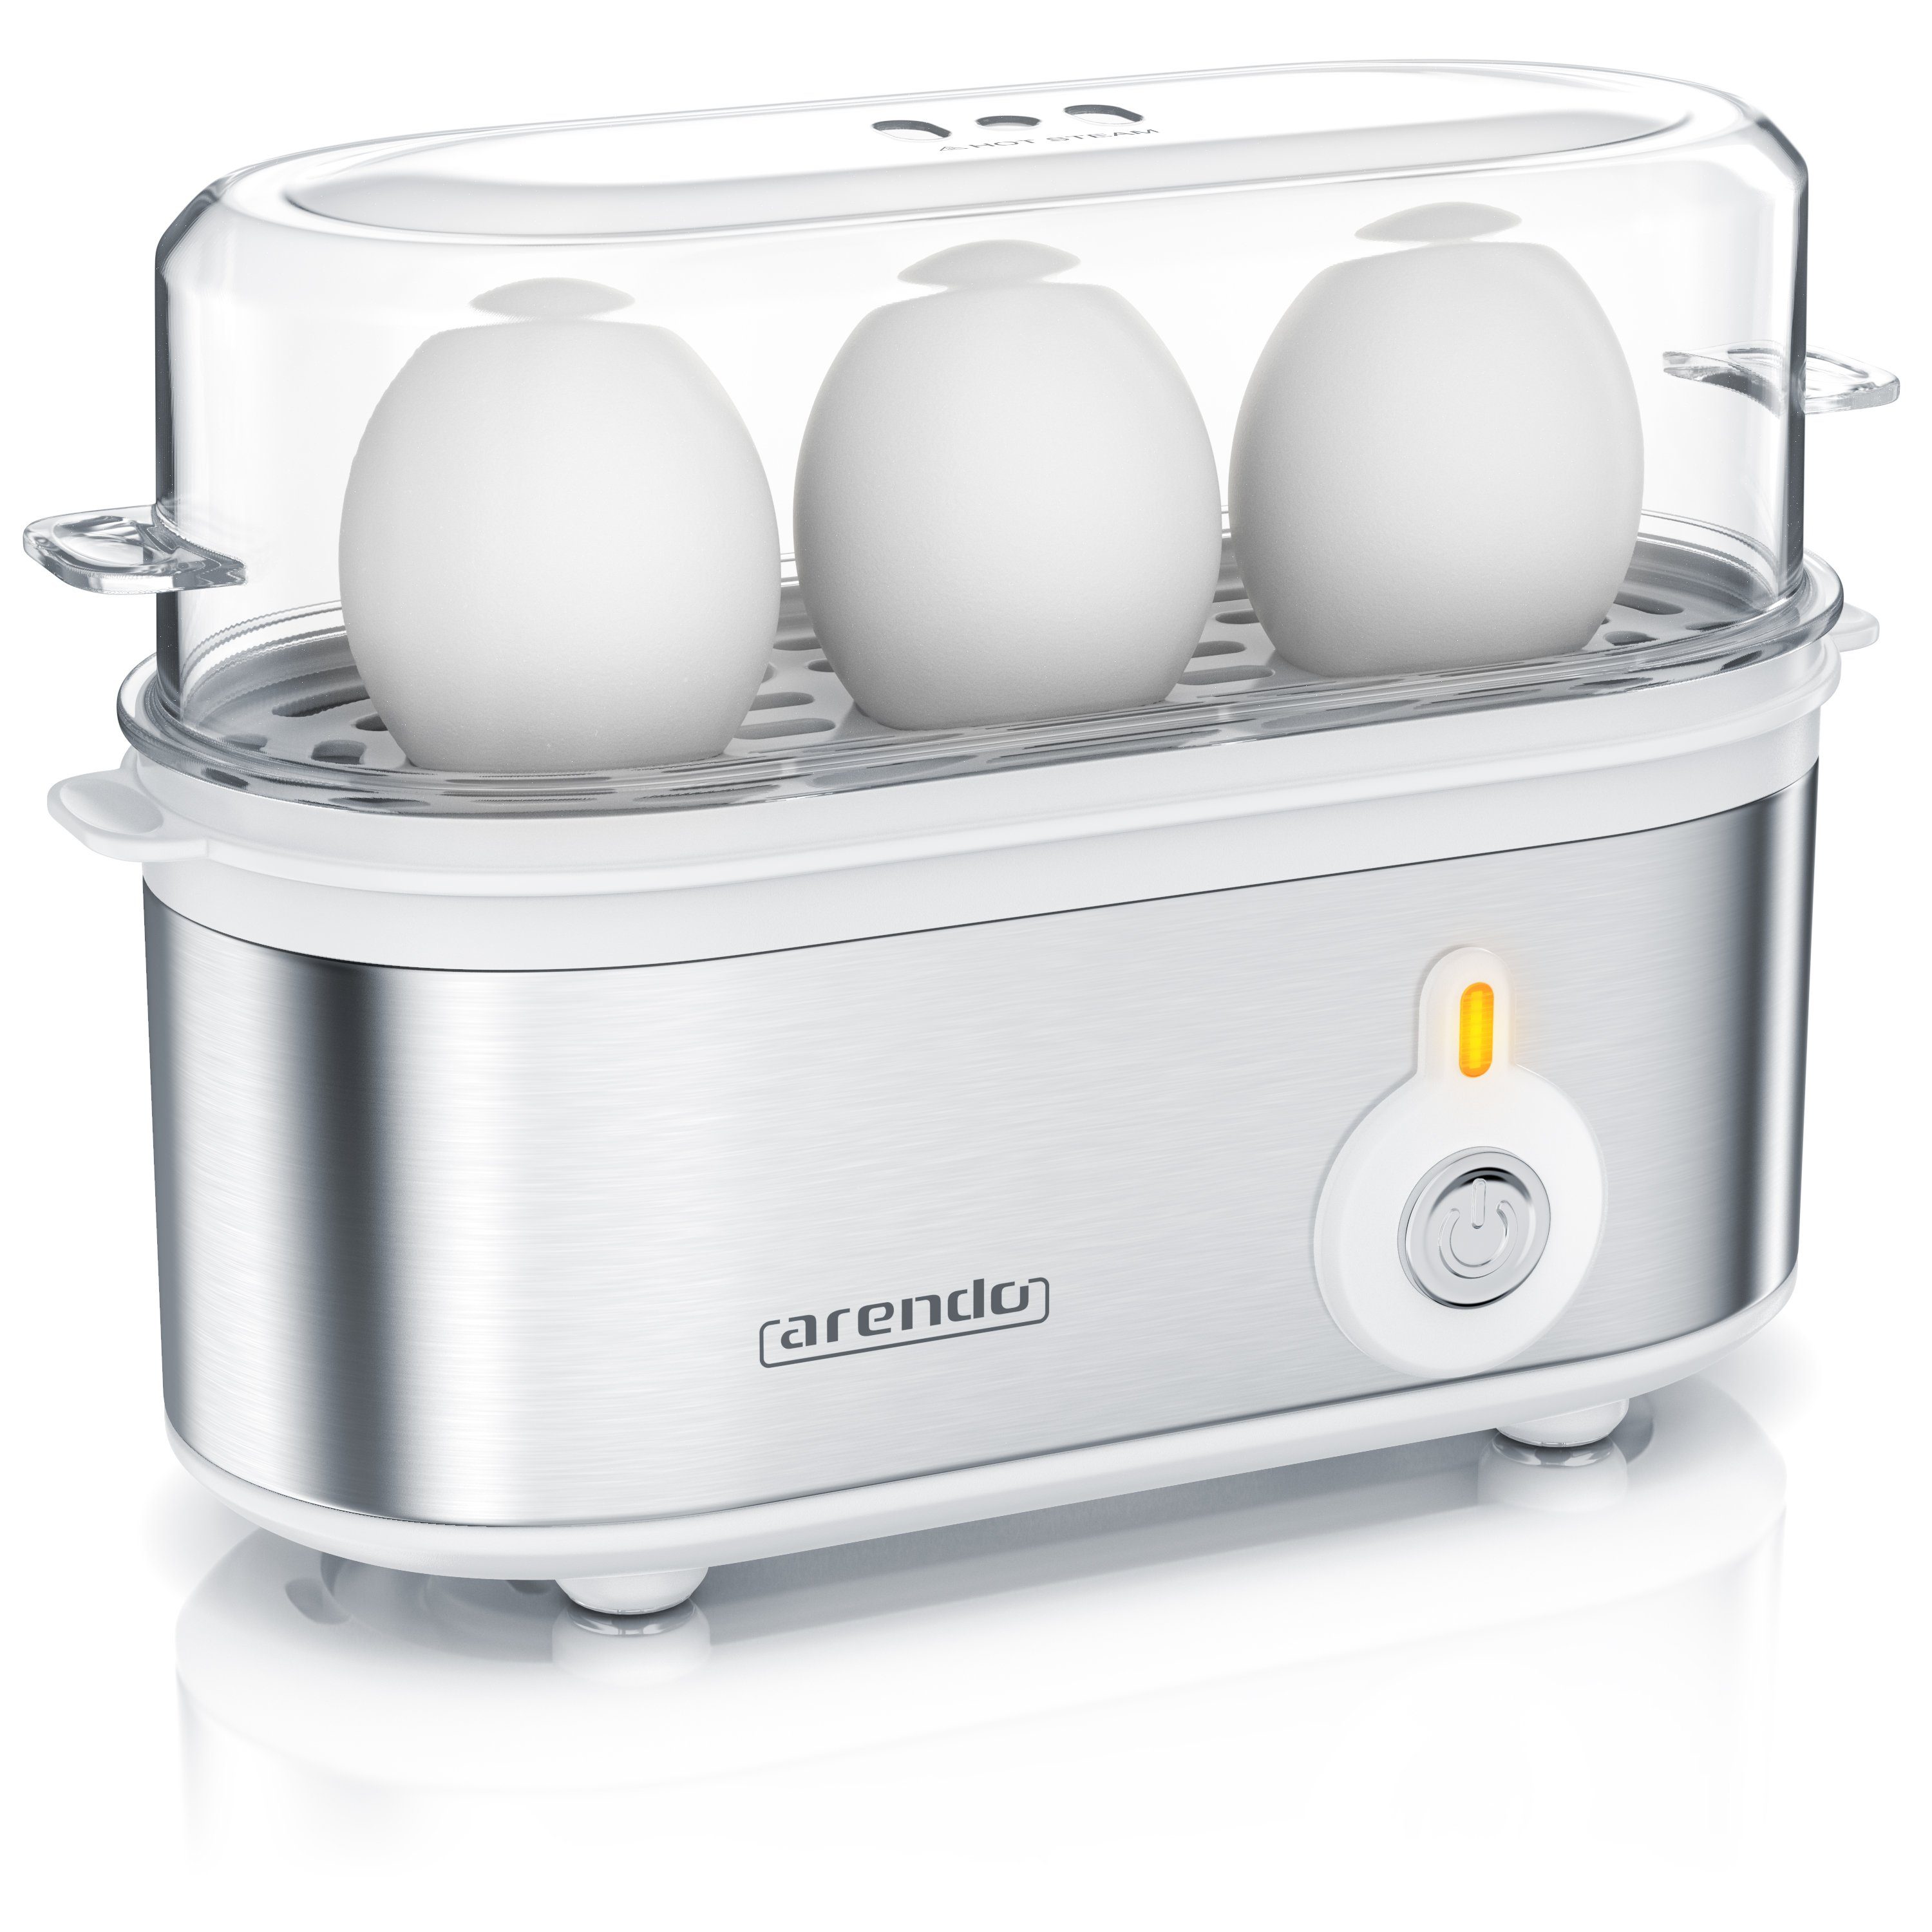 Arendo Eierkocher, Anzahl Eier Eier: Edelstahl 3 210 St., 1-3 W, Eierkocher für